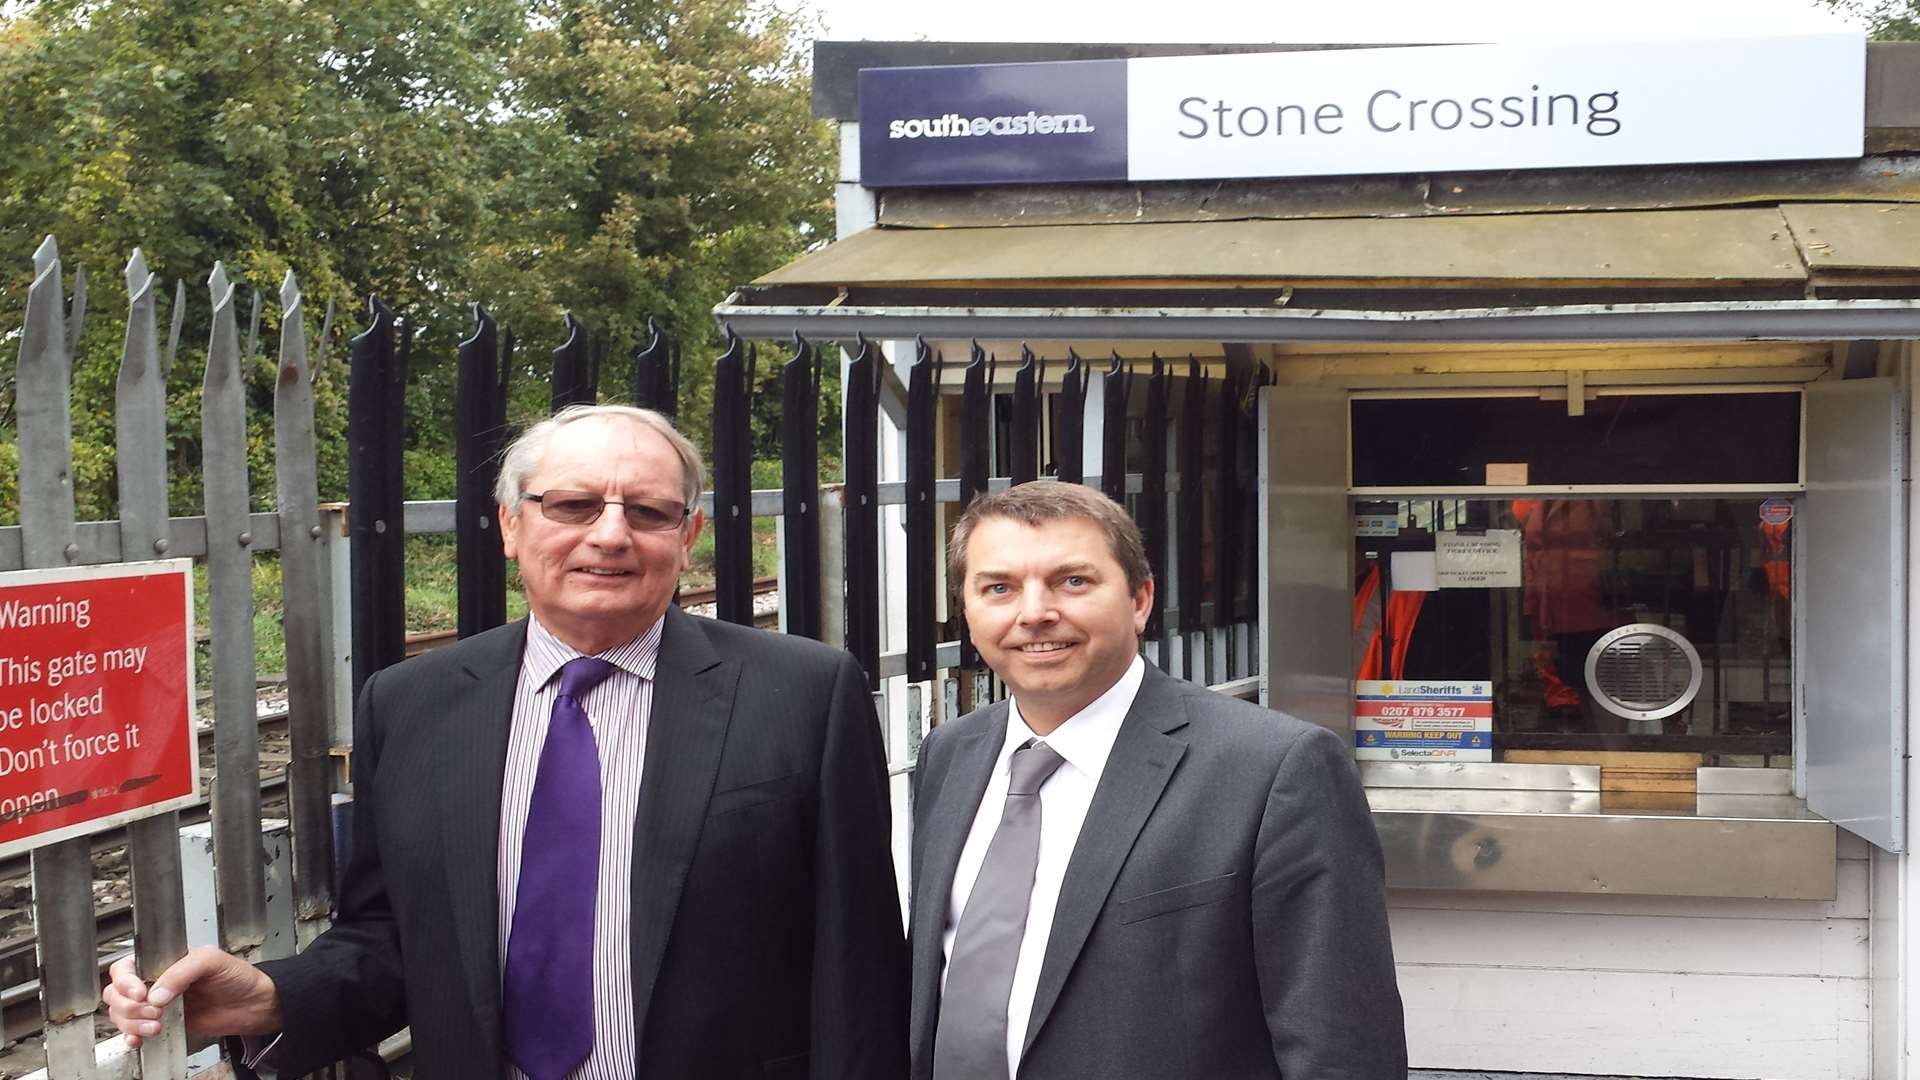 MP Gareth Johnson and Cllr John Burrell at the station